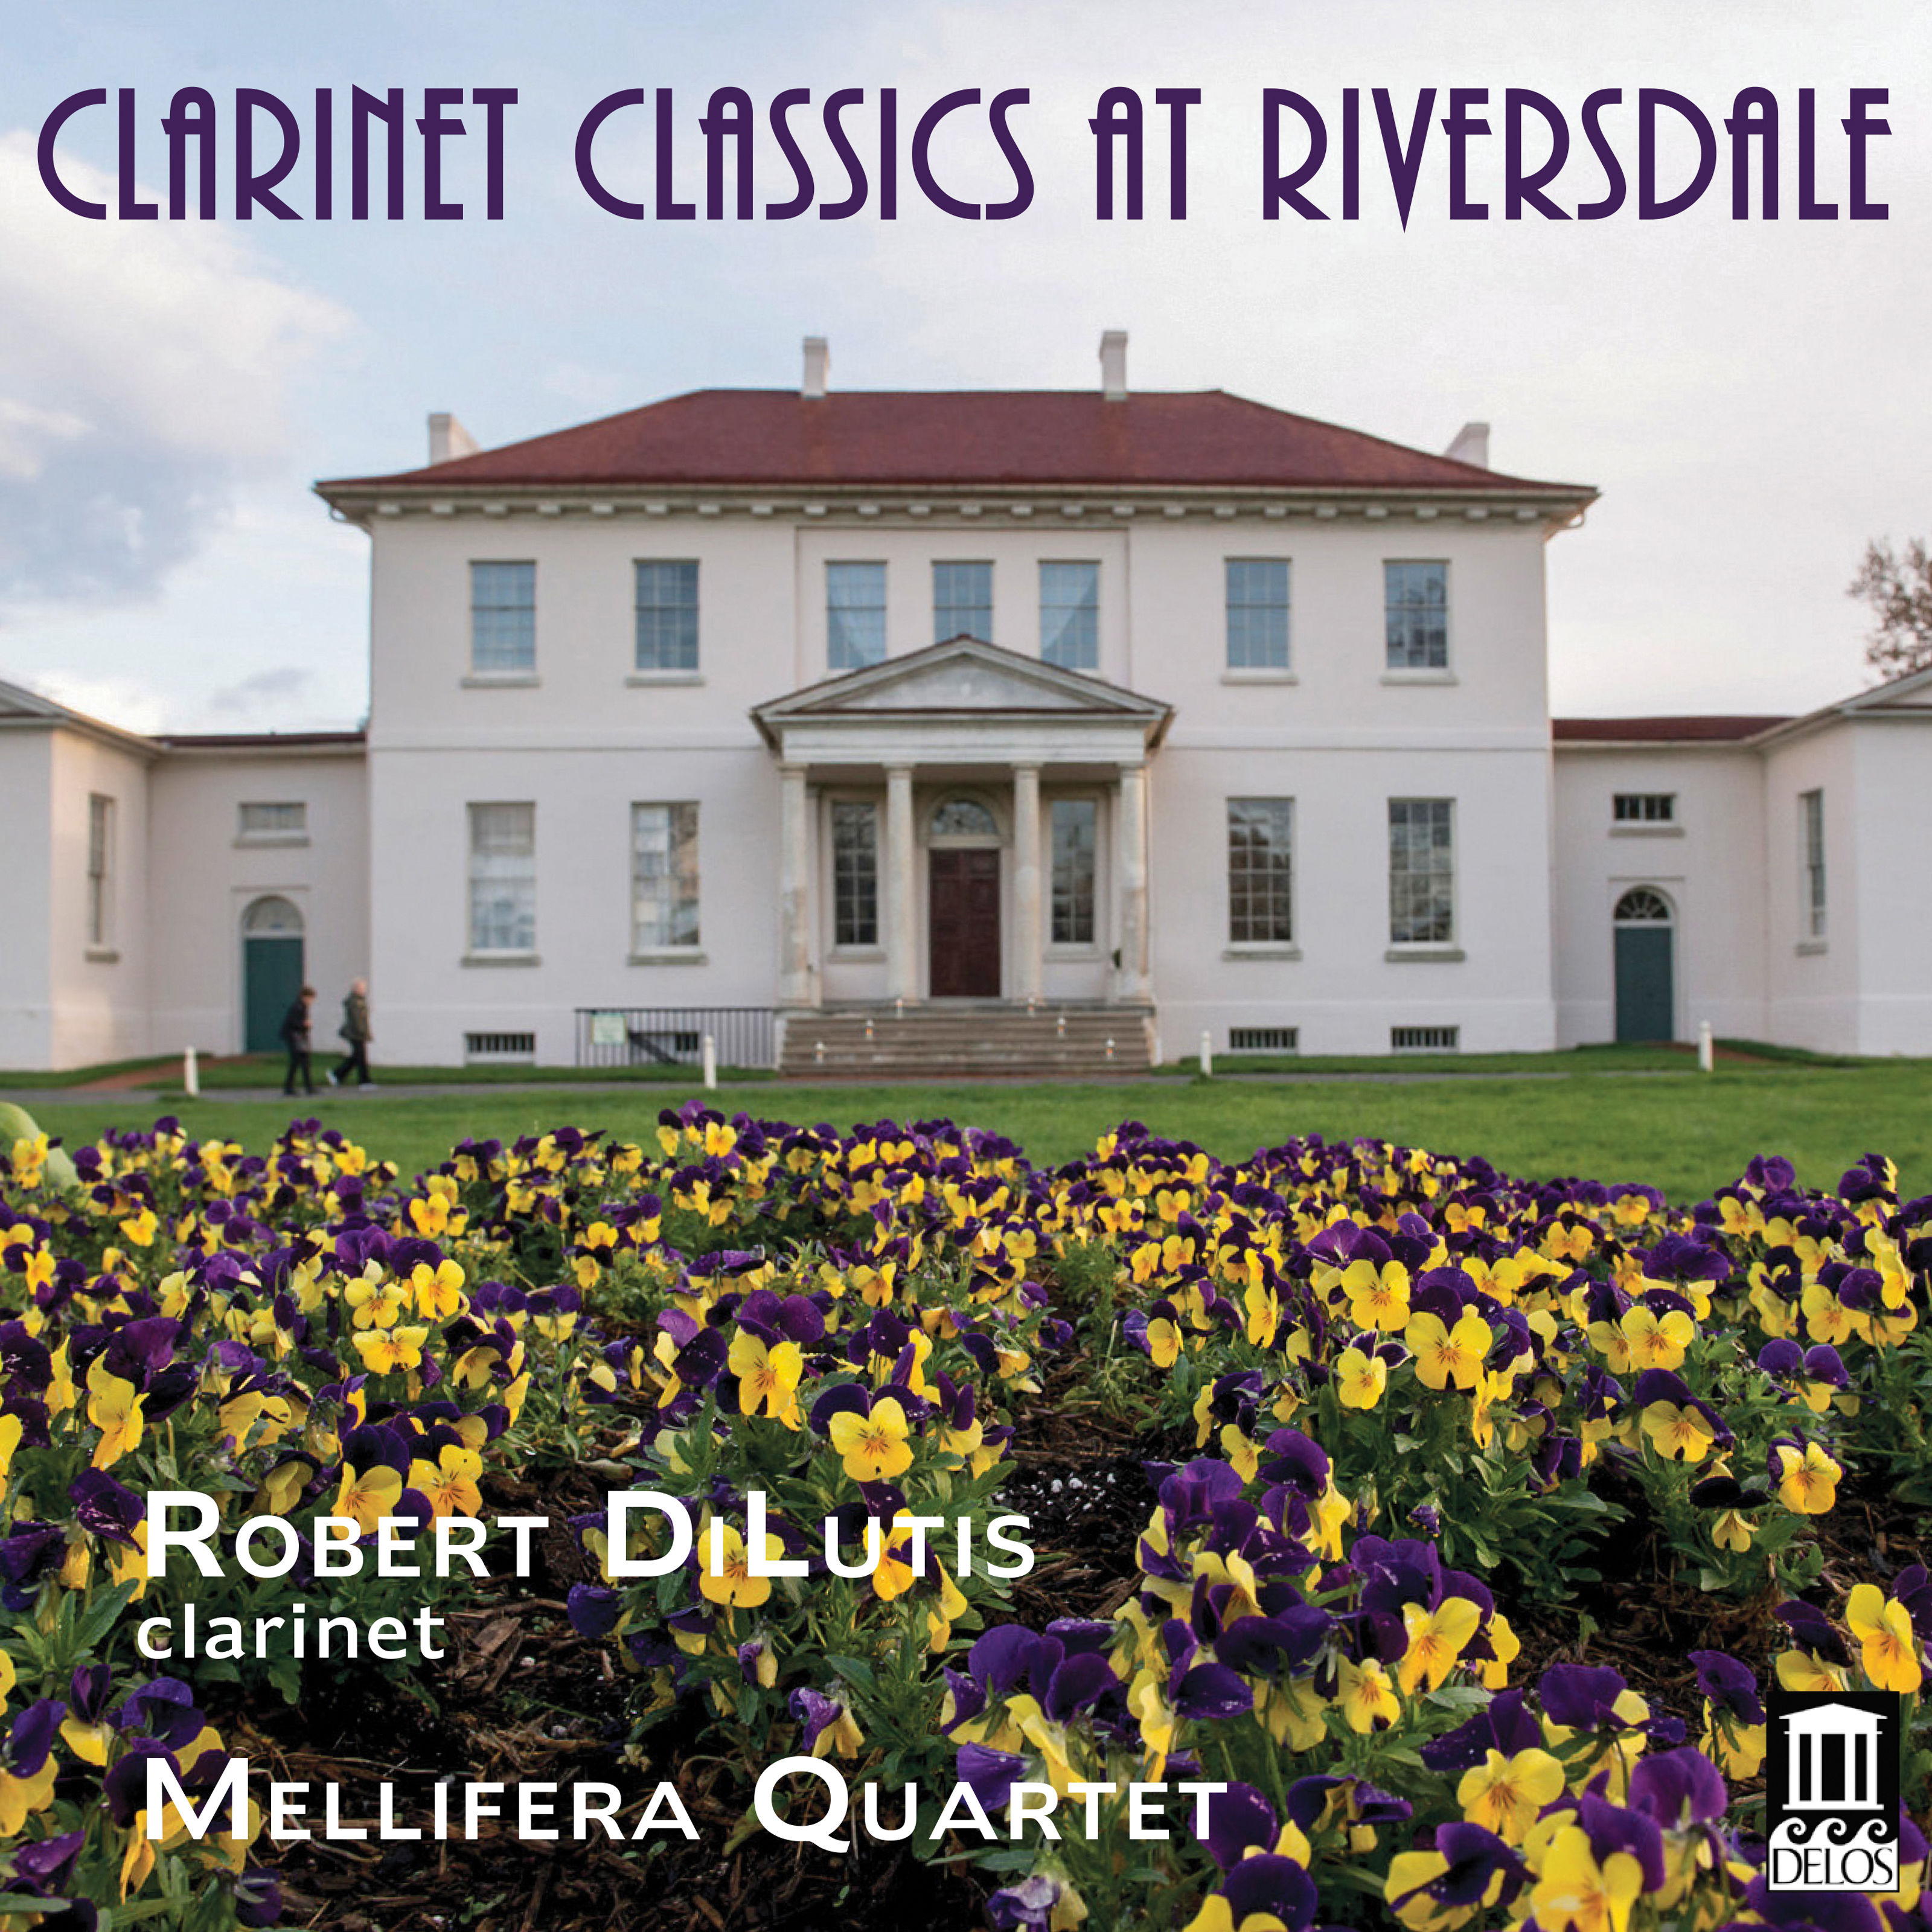 Robert DiLutis & Mellifera Quartet – Clarinet Classics at Riversdale (2019) [FLAC 24bit/96kHz]